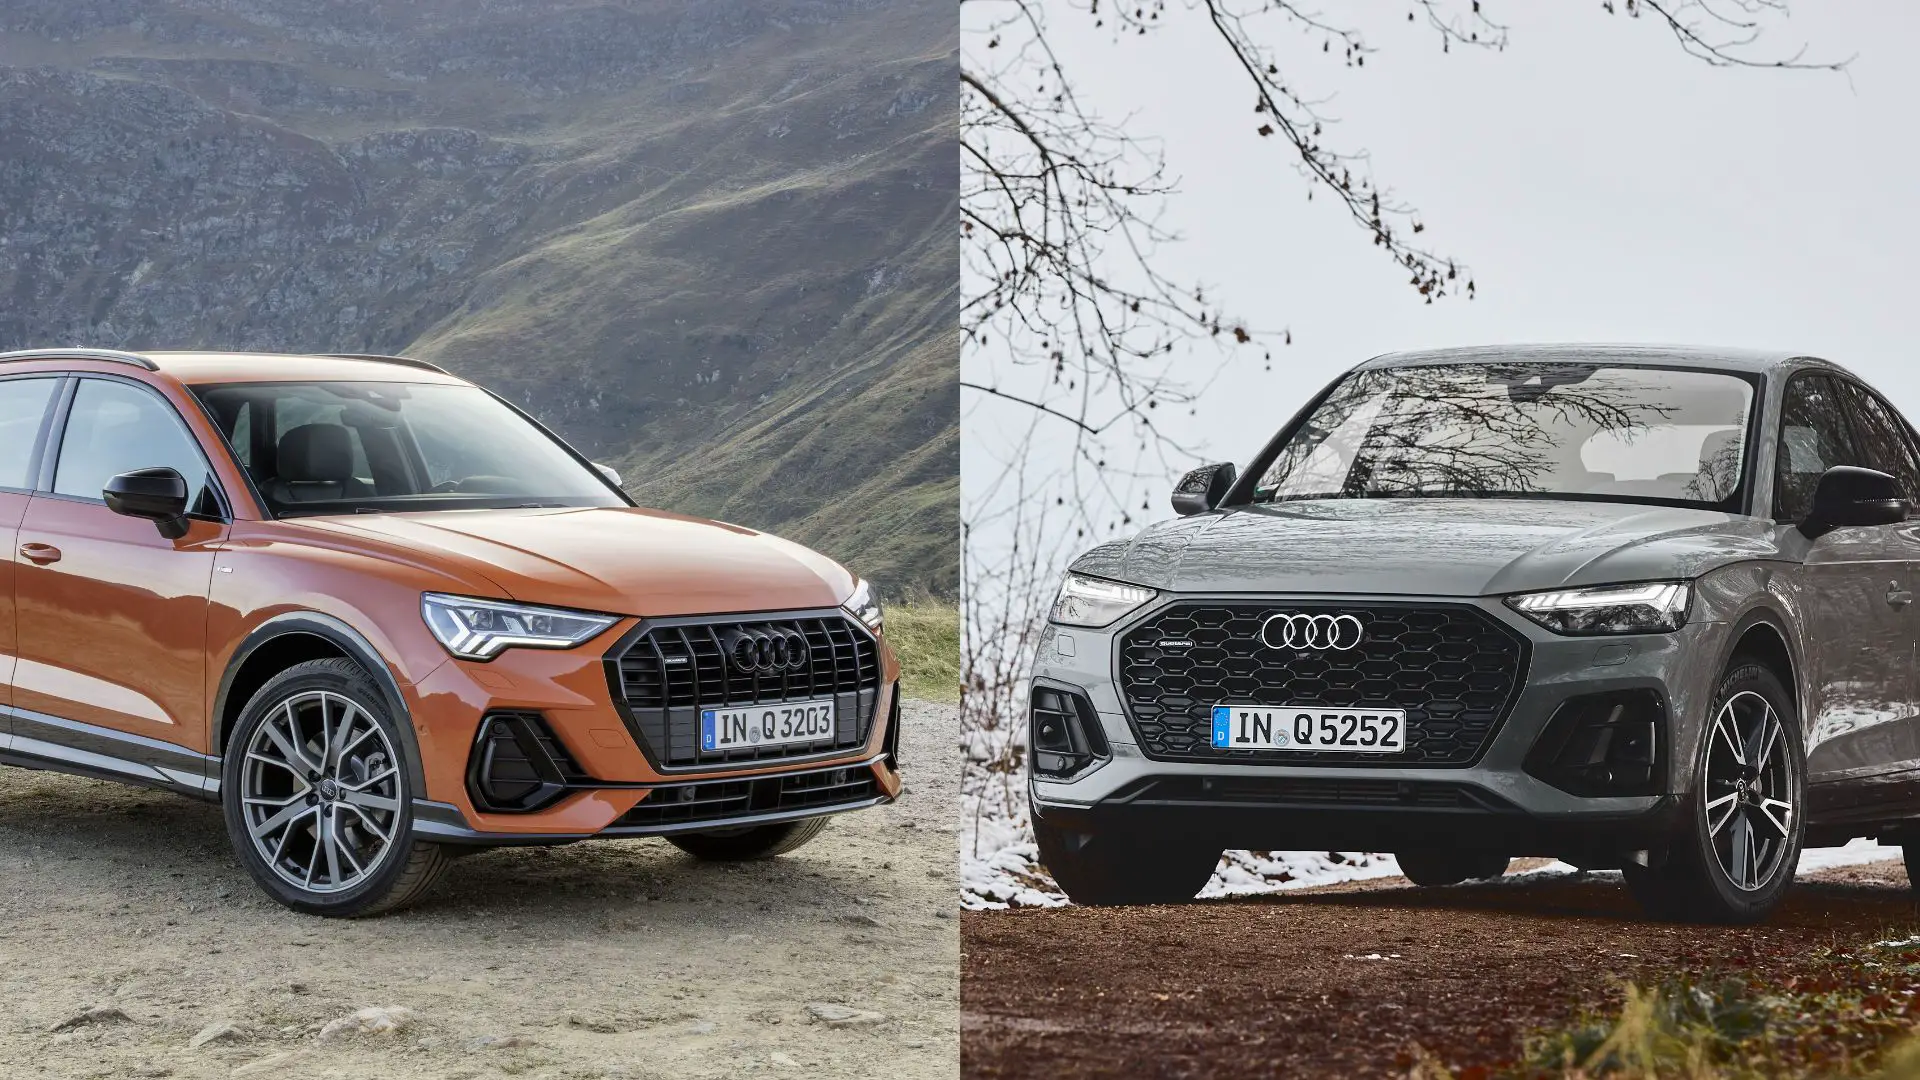 Audi Q3 vs Q5 comparison